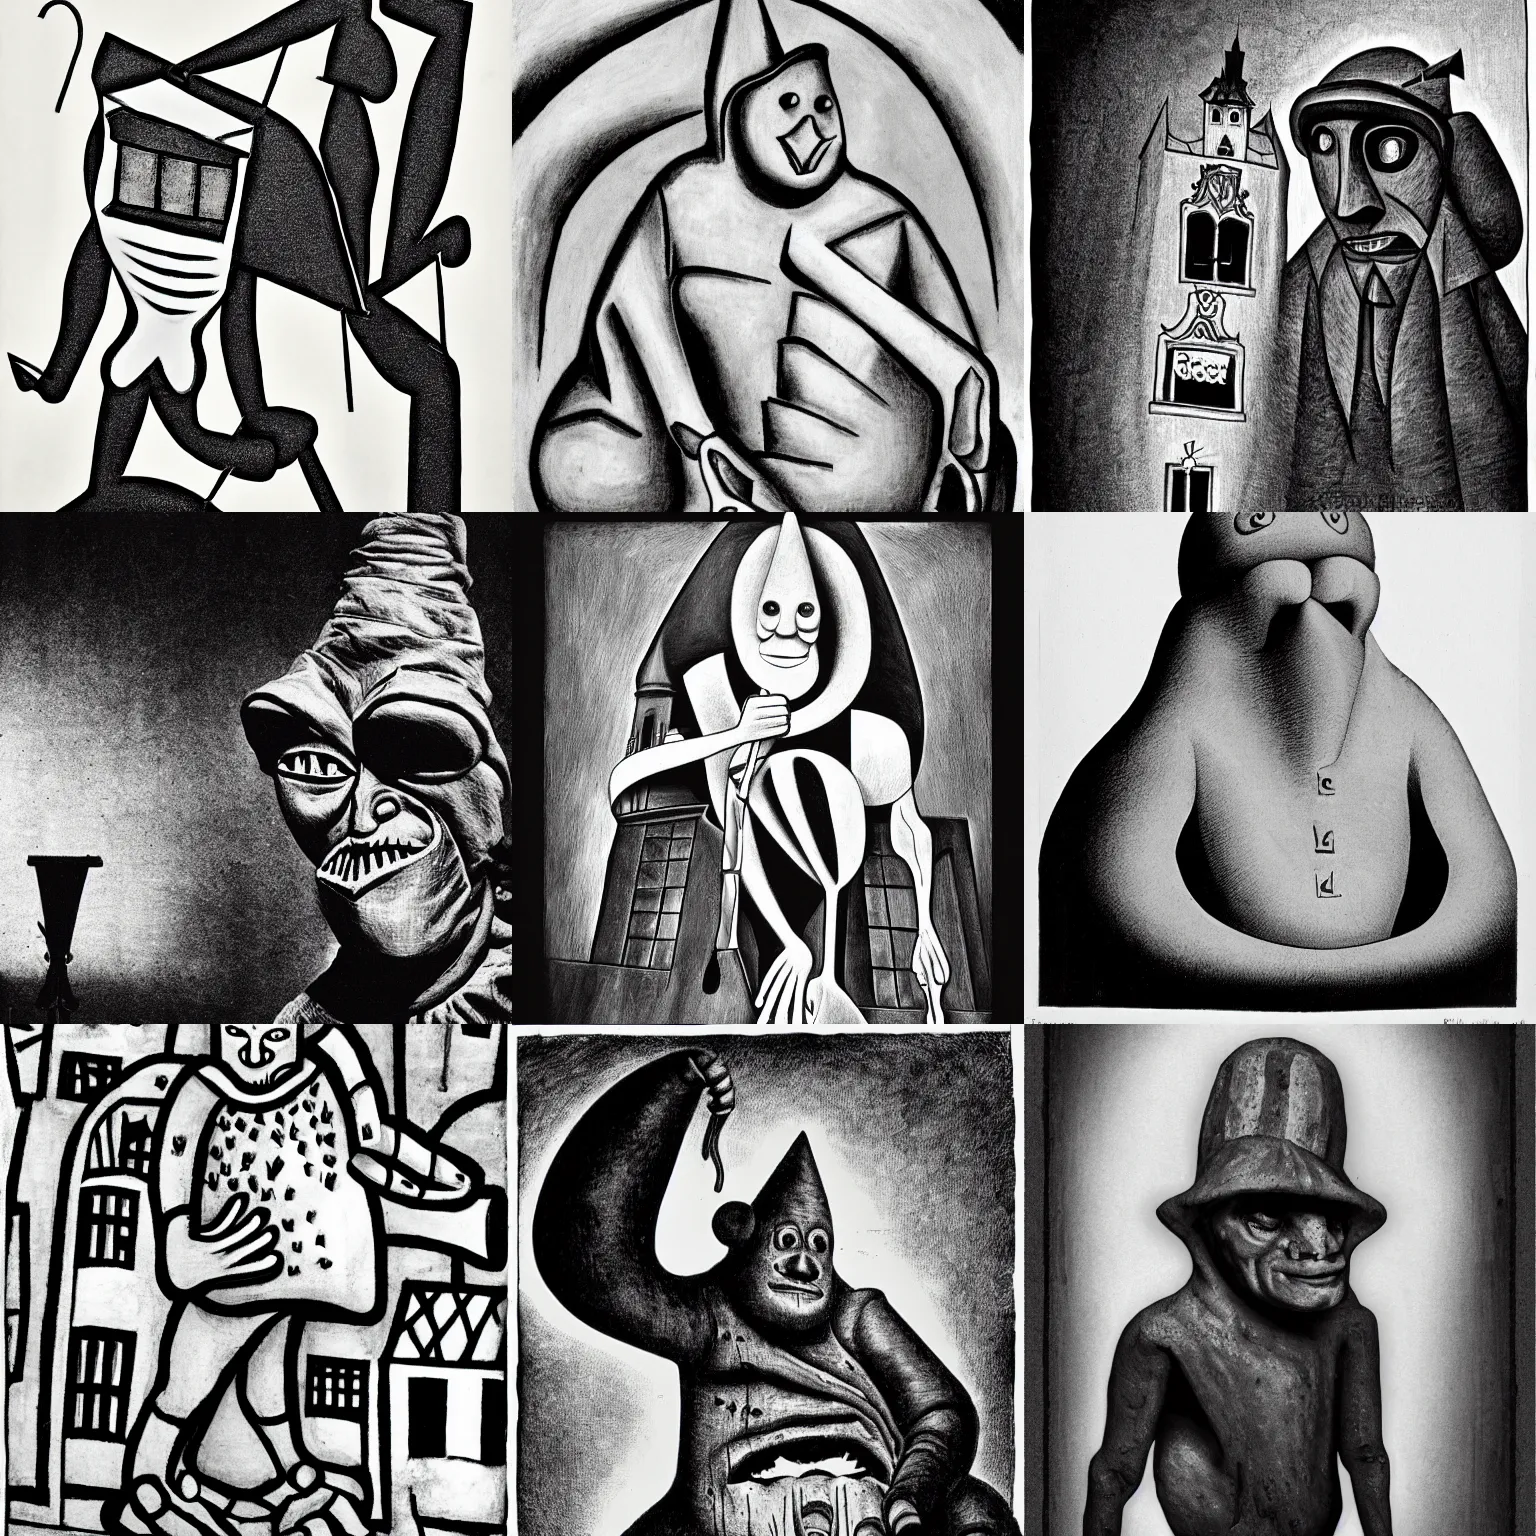 Prompt: black and white dada artwork of the evil golem from prague